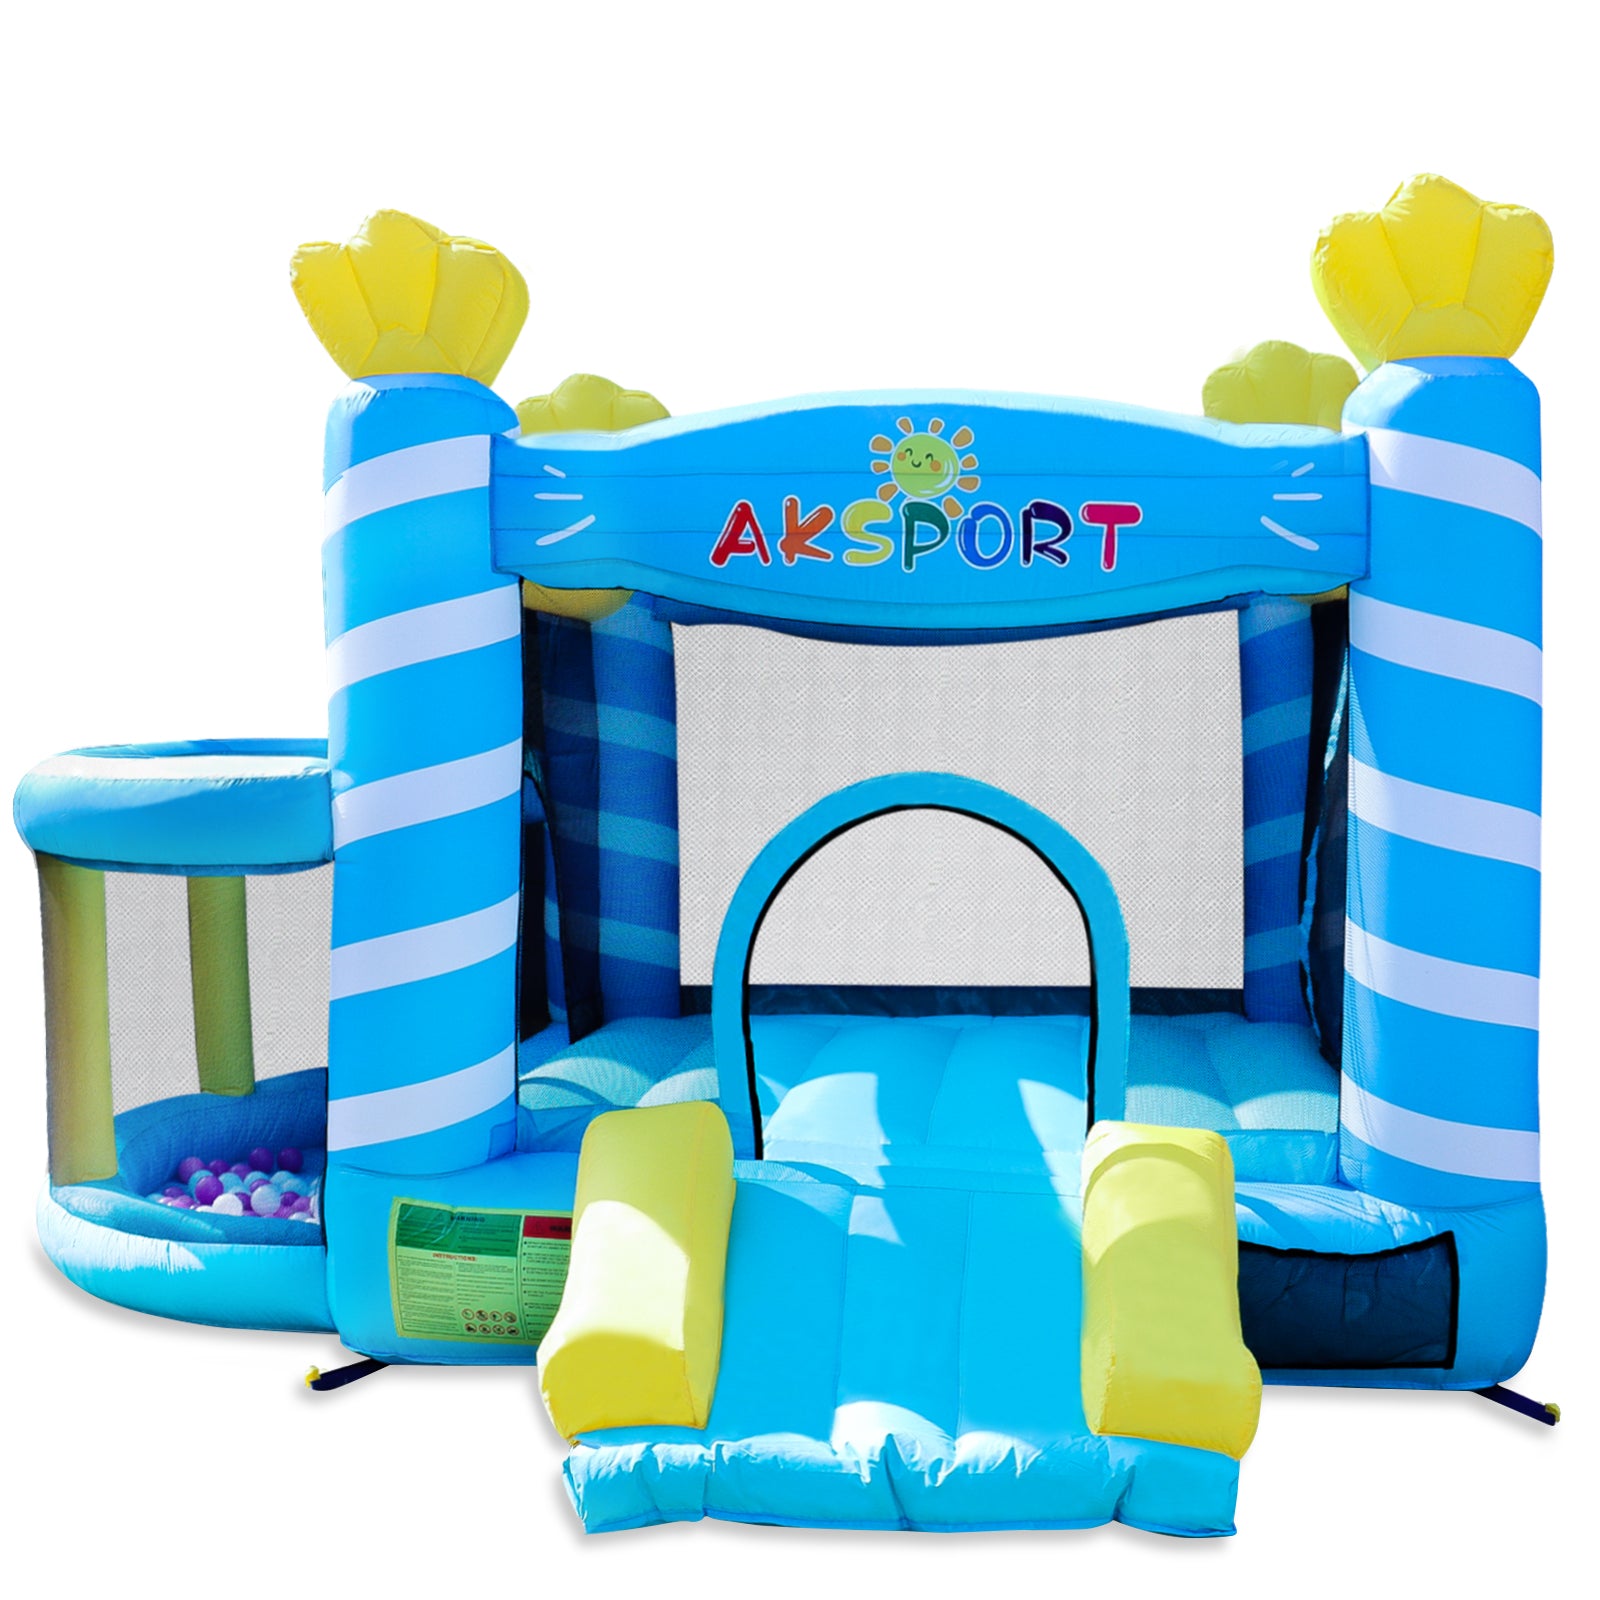 AKSPORT Inflatable Bounce House-Blue - AKSPORT